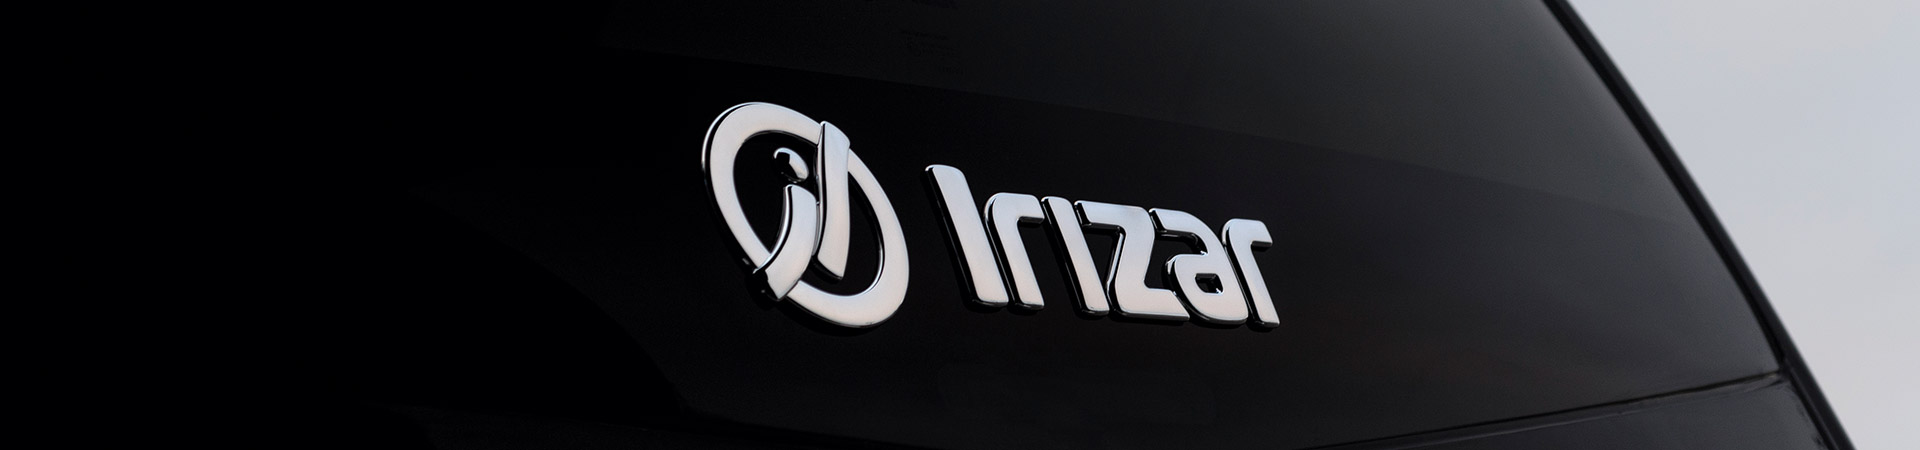 The Irizar Brand